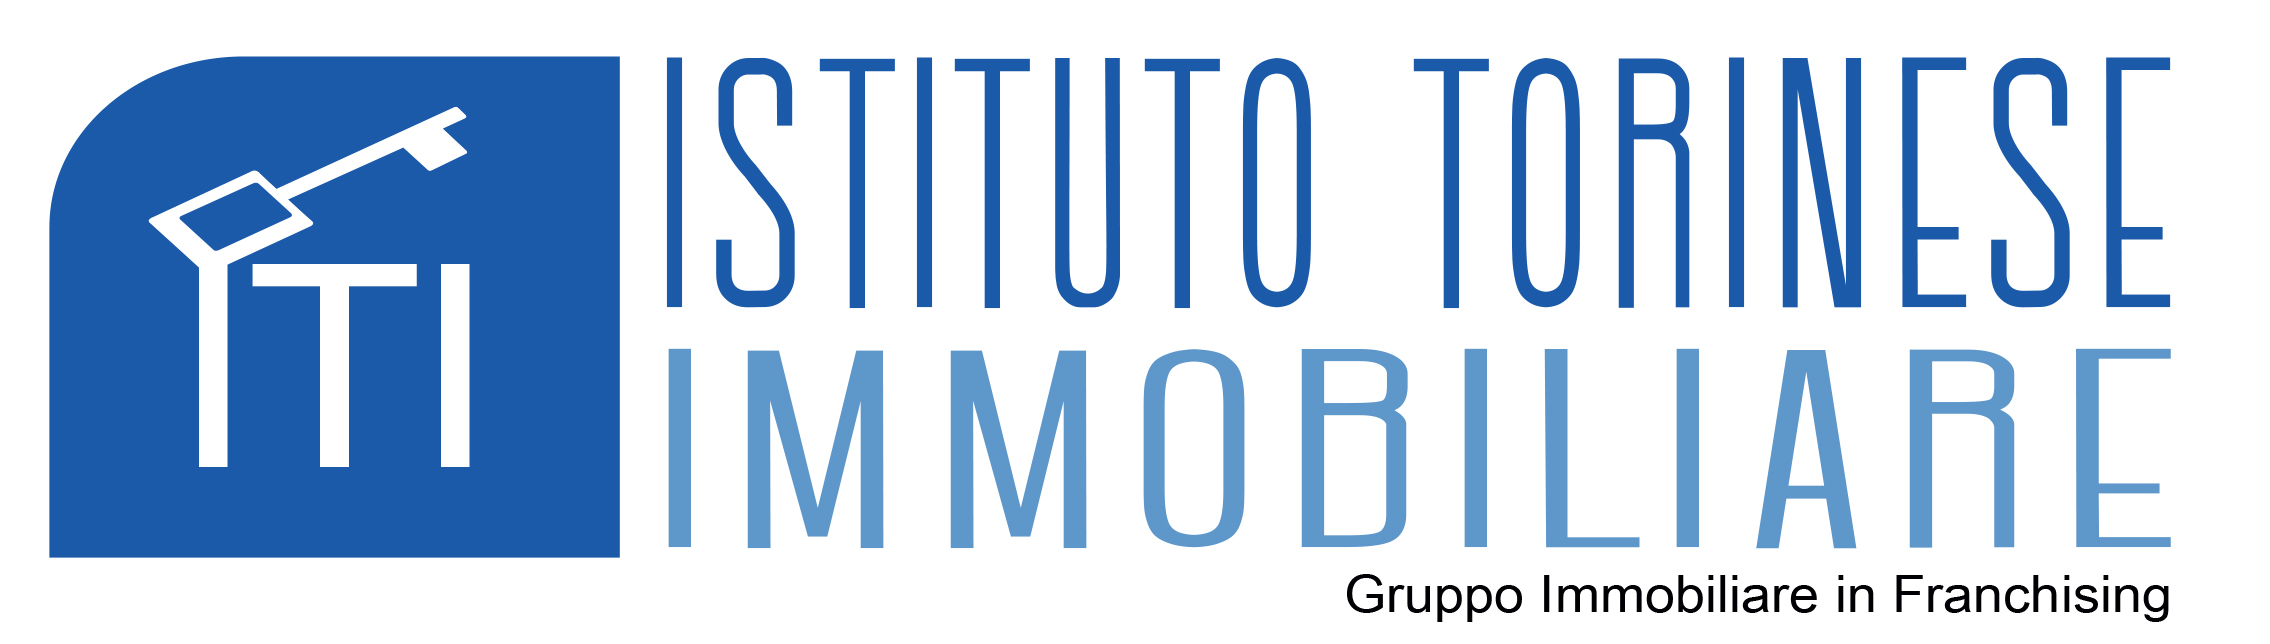 Logo - ISTITUTO TORINESE IMMOBILIARE - CASSINO